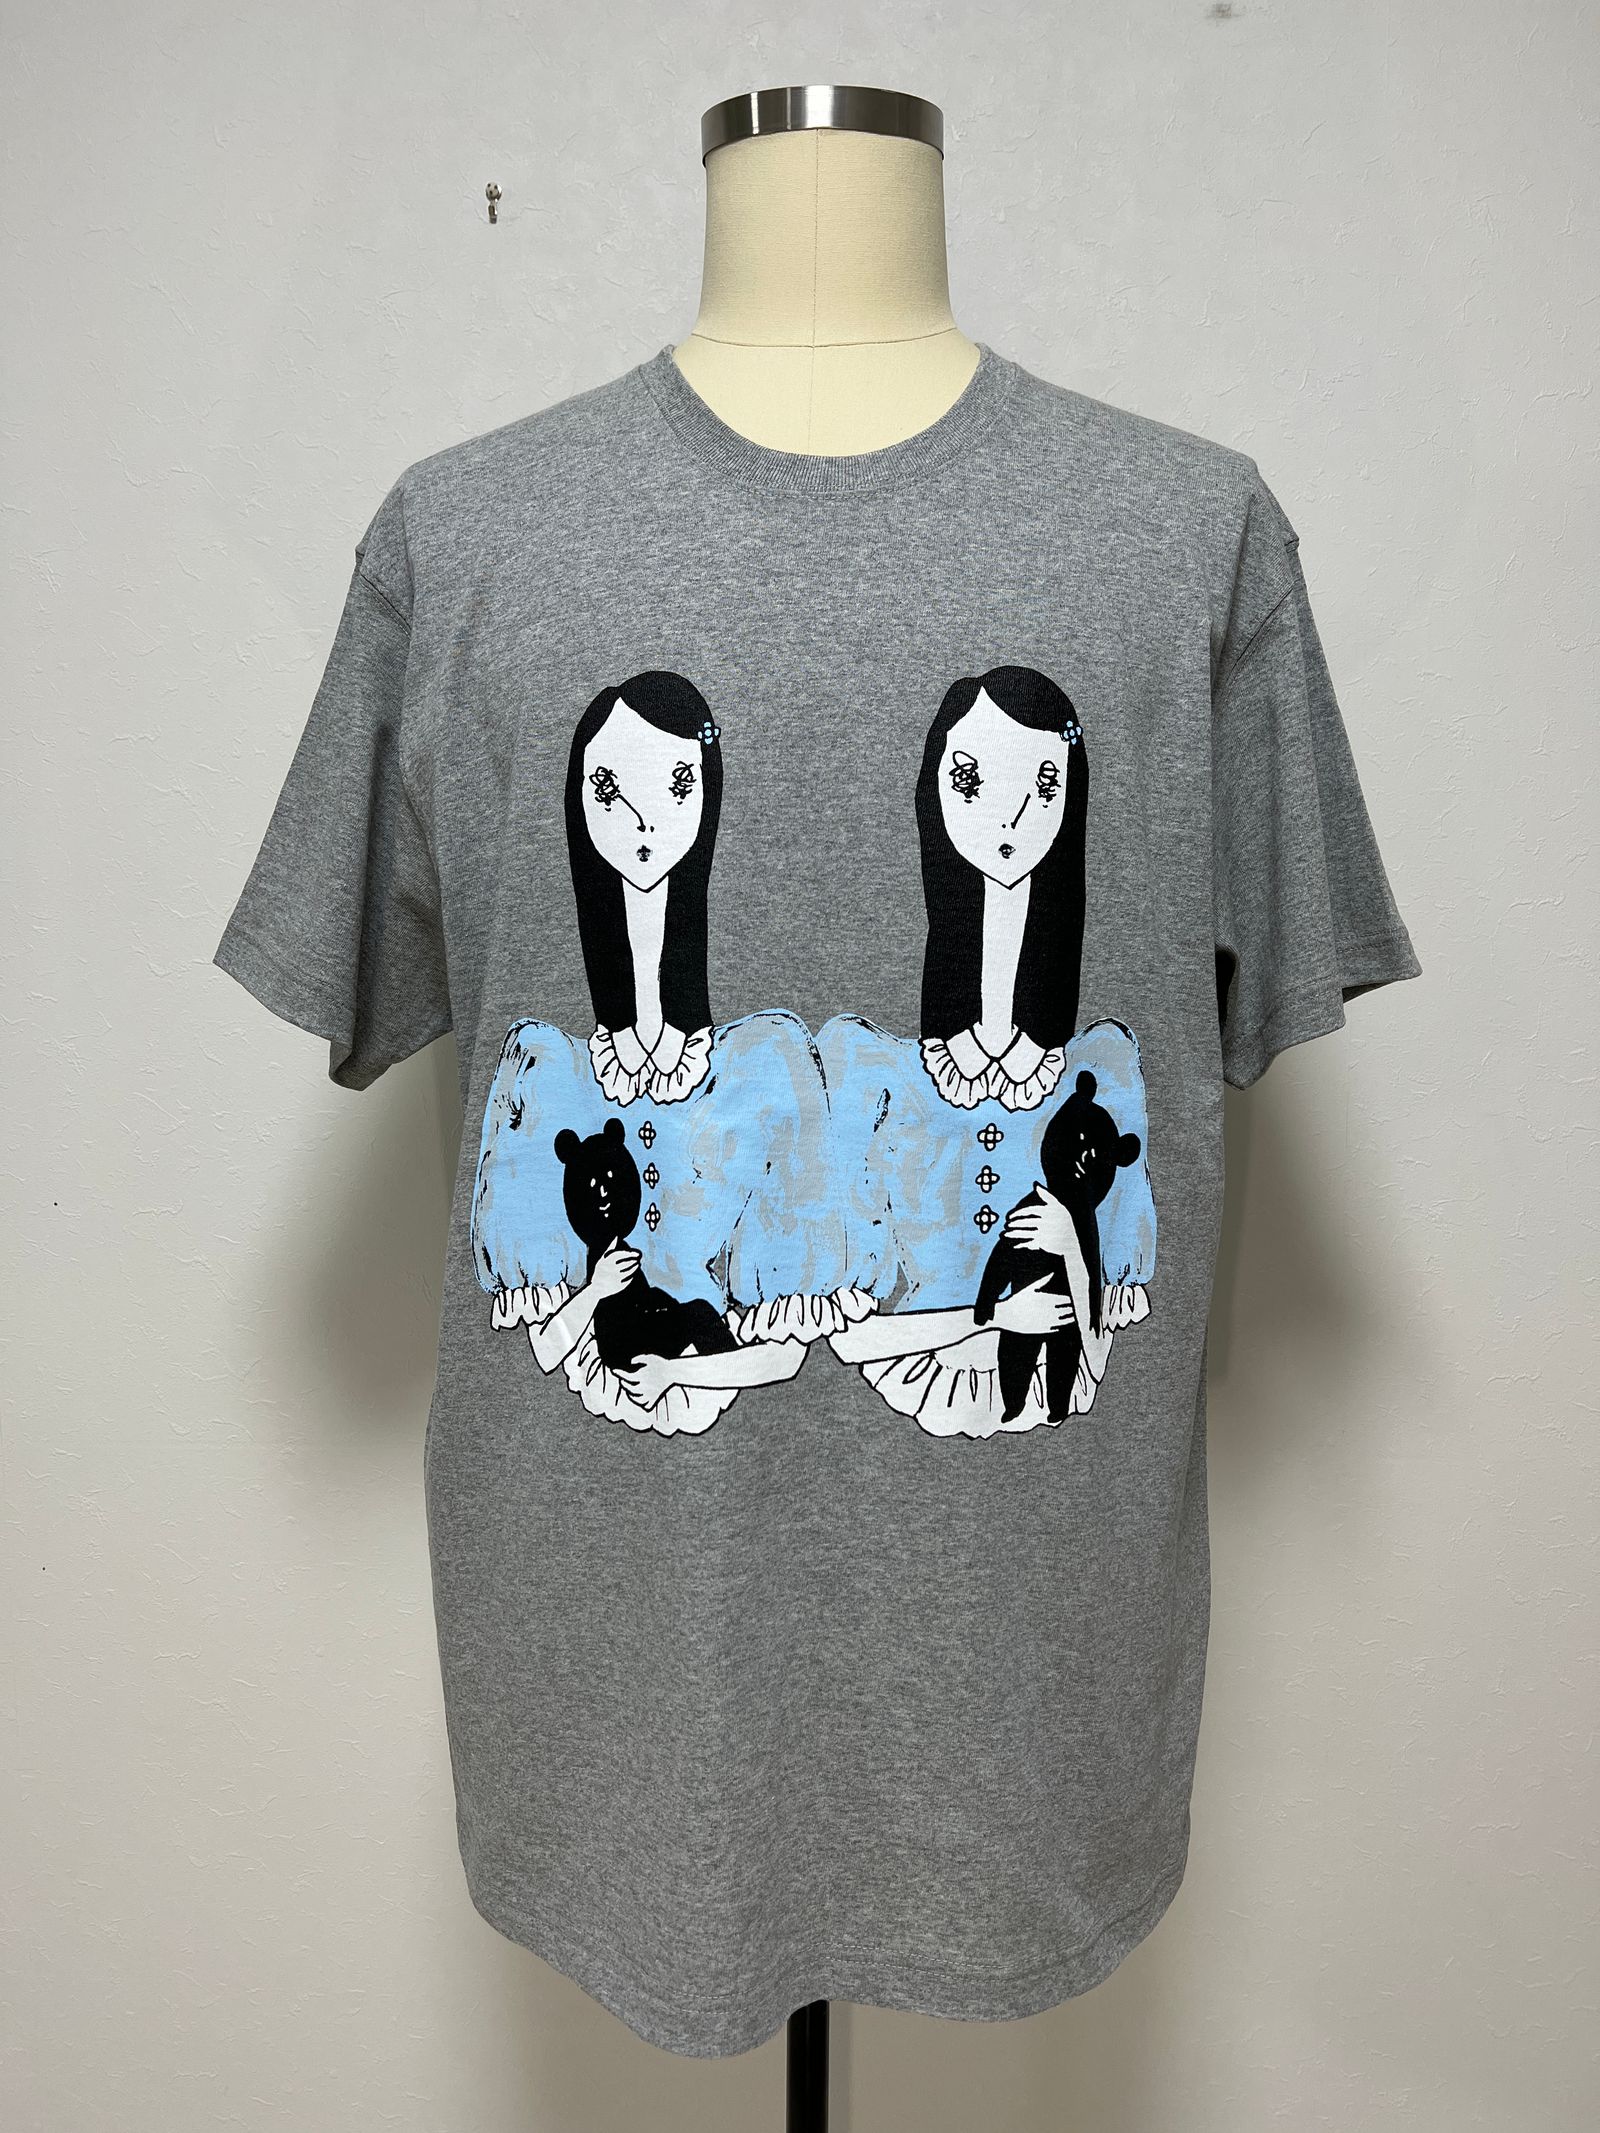 KIDILL - プリントTシャツ - TEE - COLLABORATION WITH MAYA SHIBASAKI 